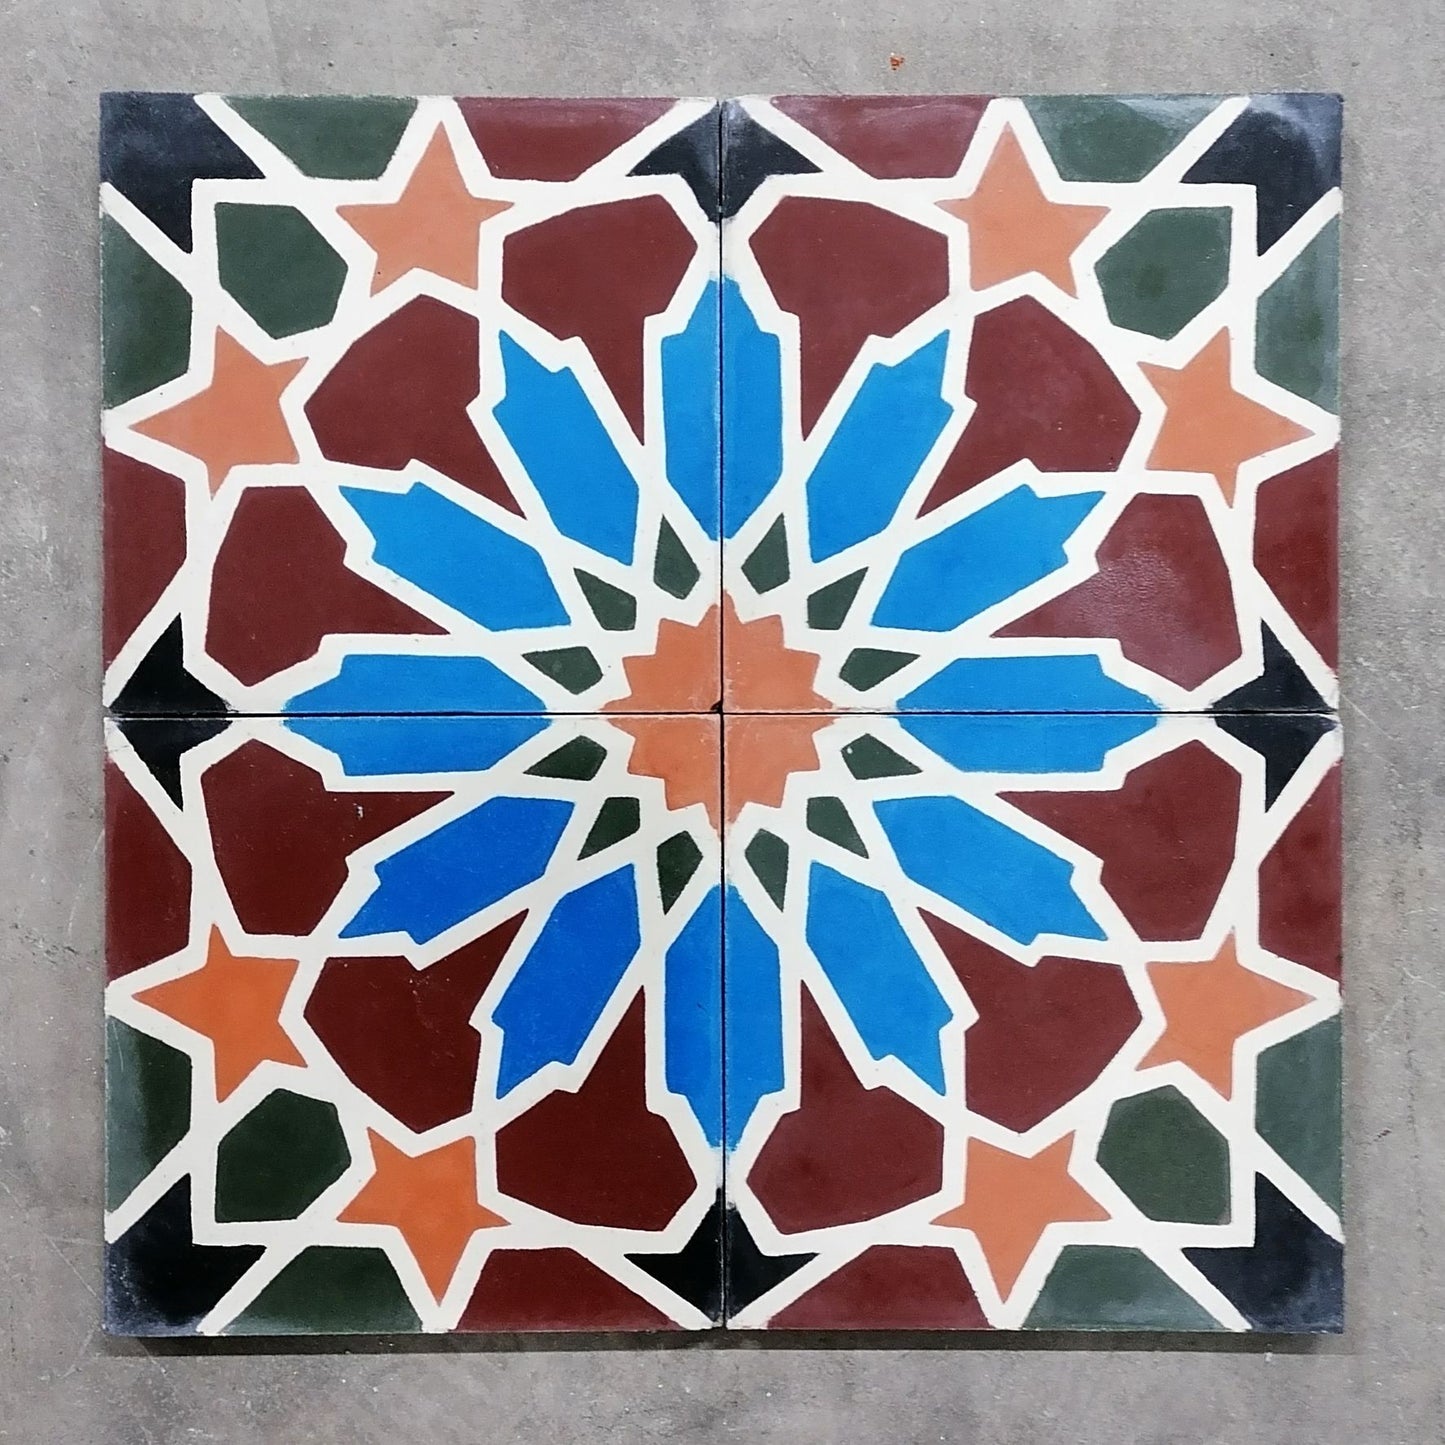 Etnisch Meubilair Marokkaans Cementine Marokko Tegels Tegels 20x20 043